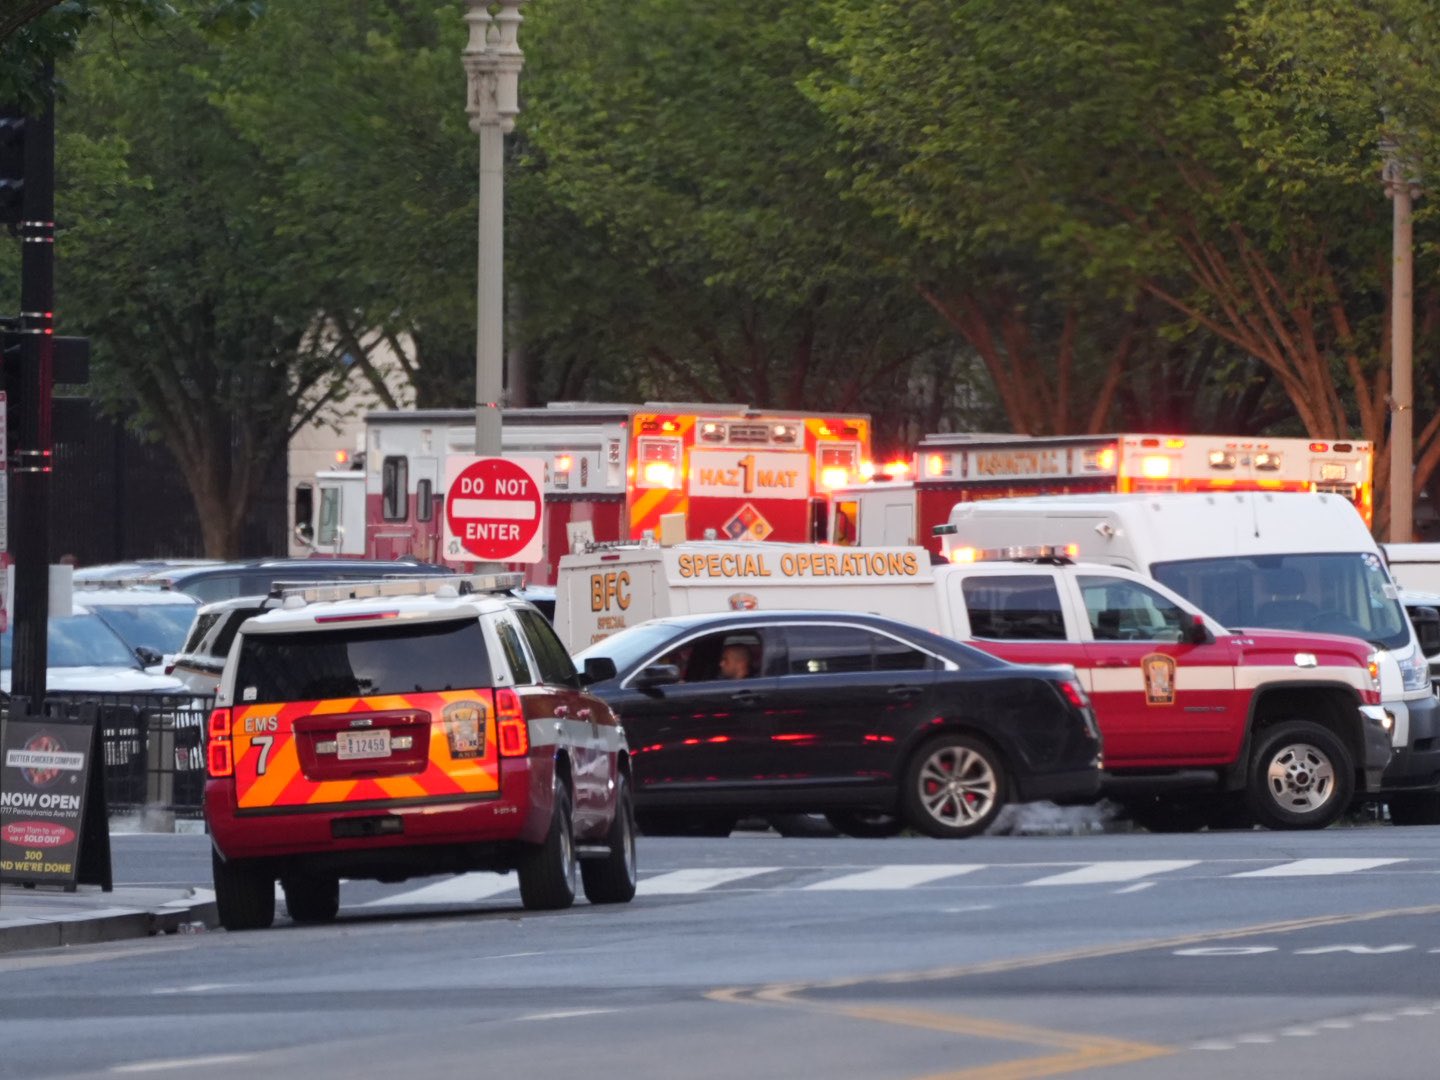 Hazmat incident at White House, secret service cordons area in Washington DC